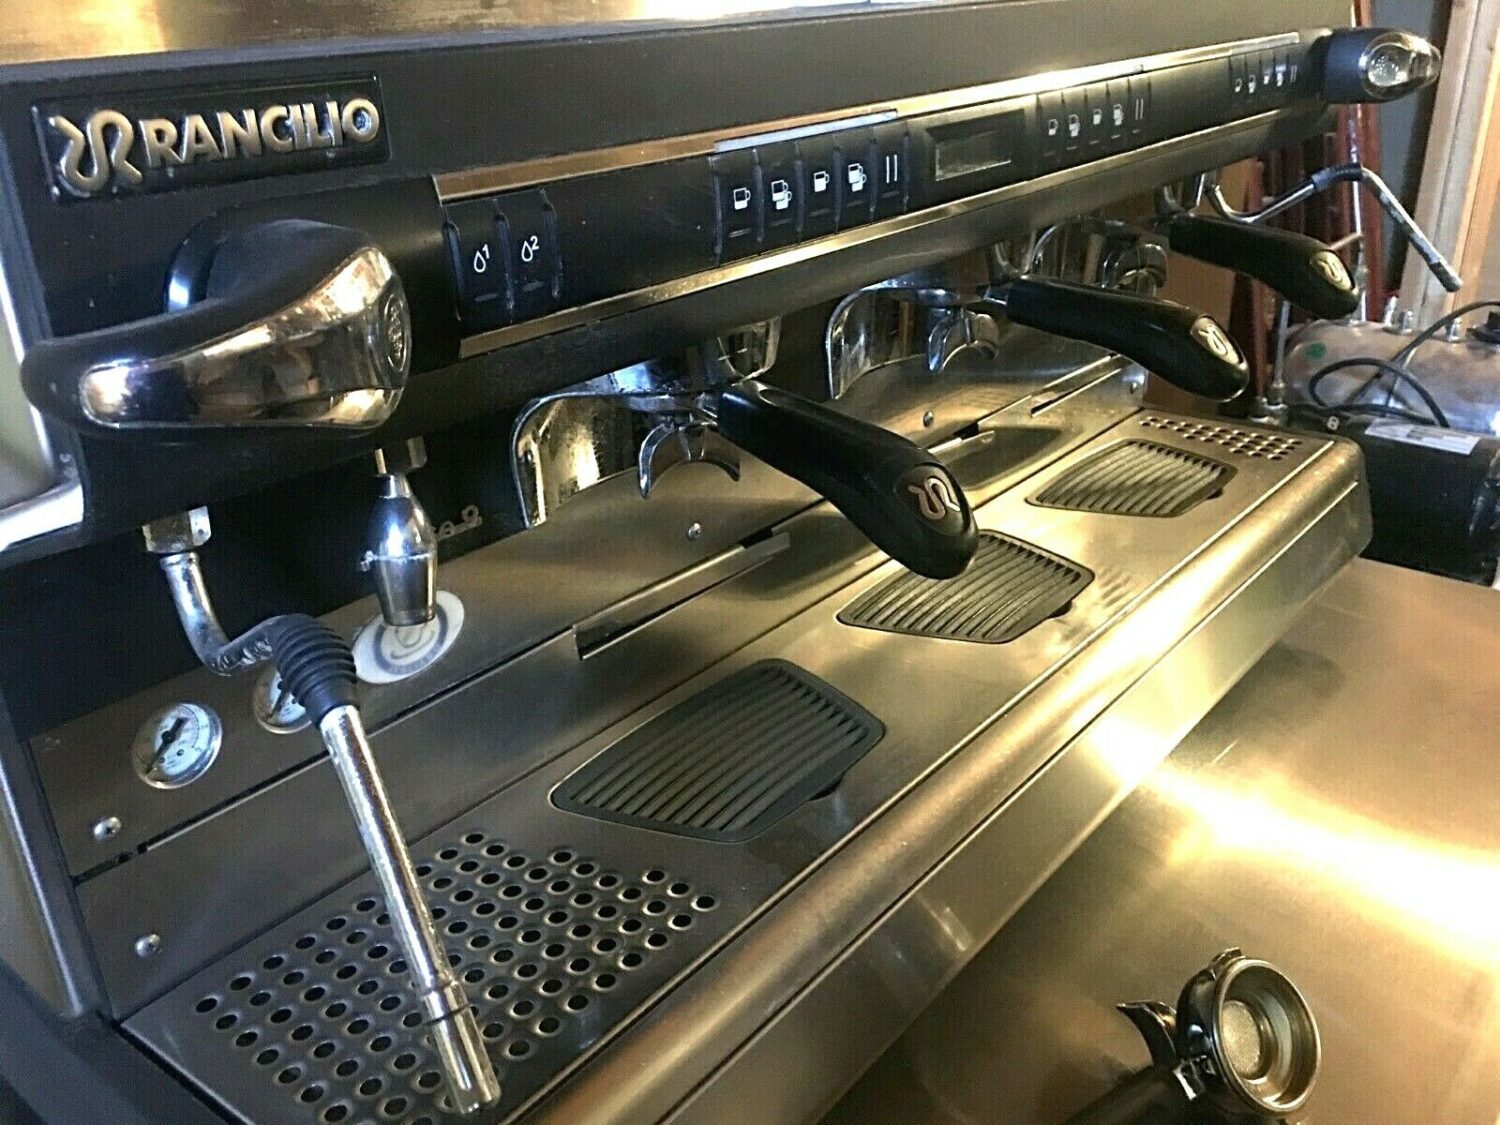 Rancilio Classe 9 USB Coffee Machine